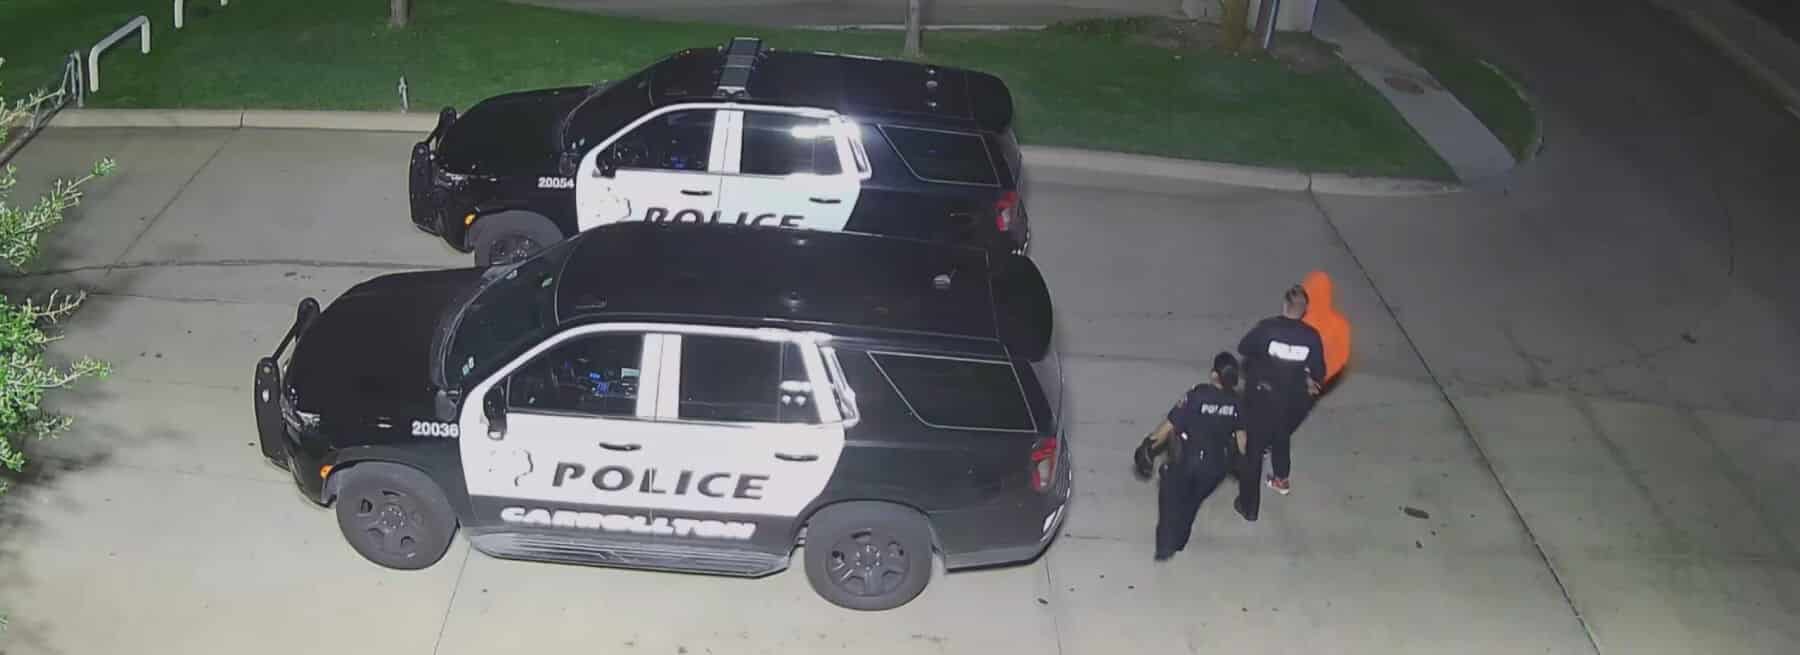 Burglar caught at Texas dealership